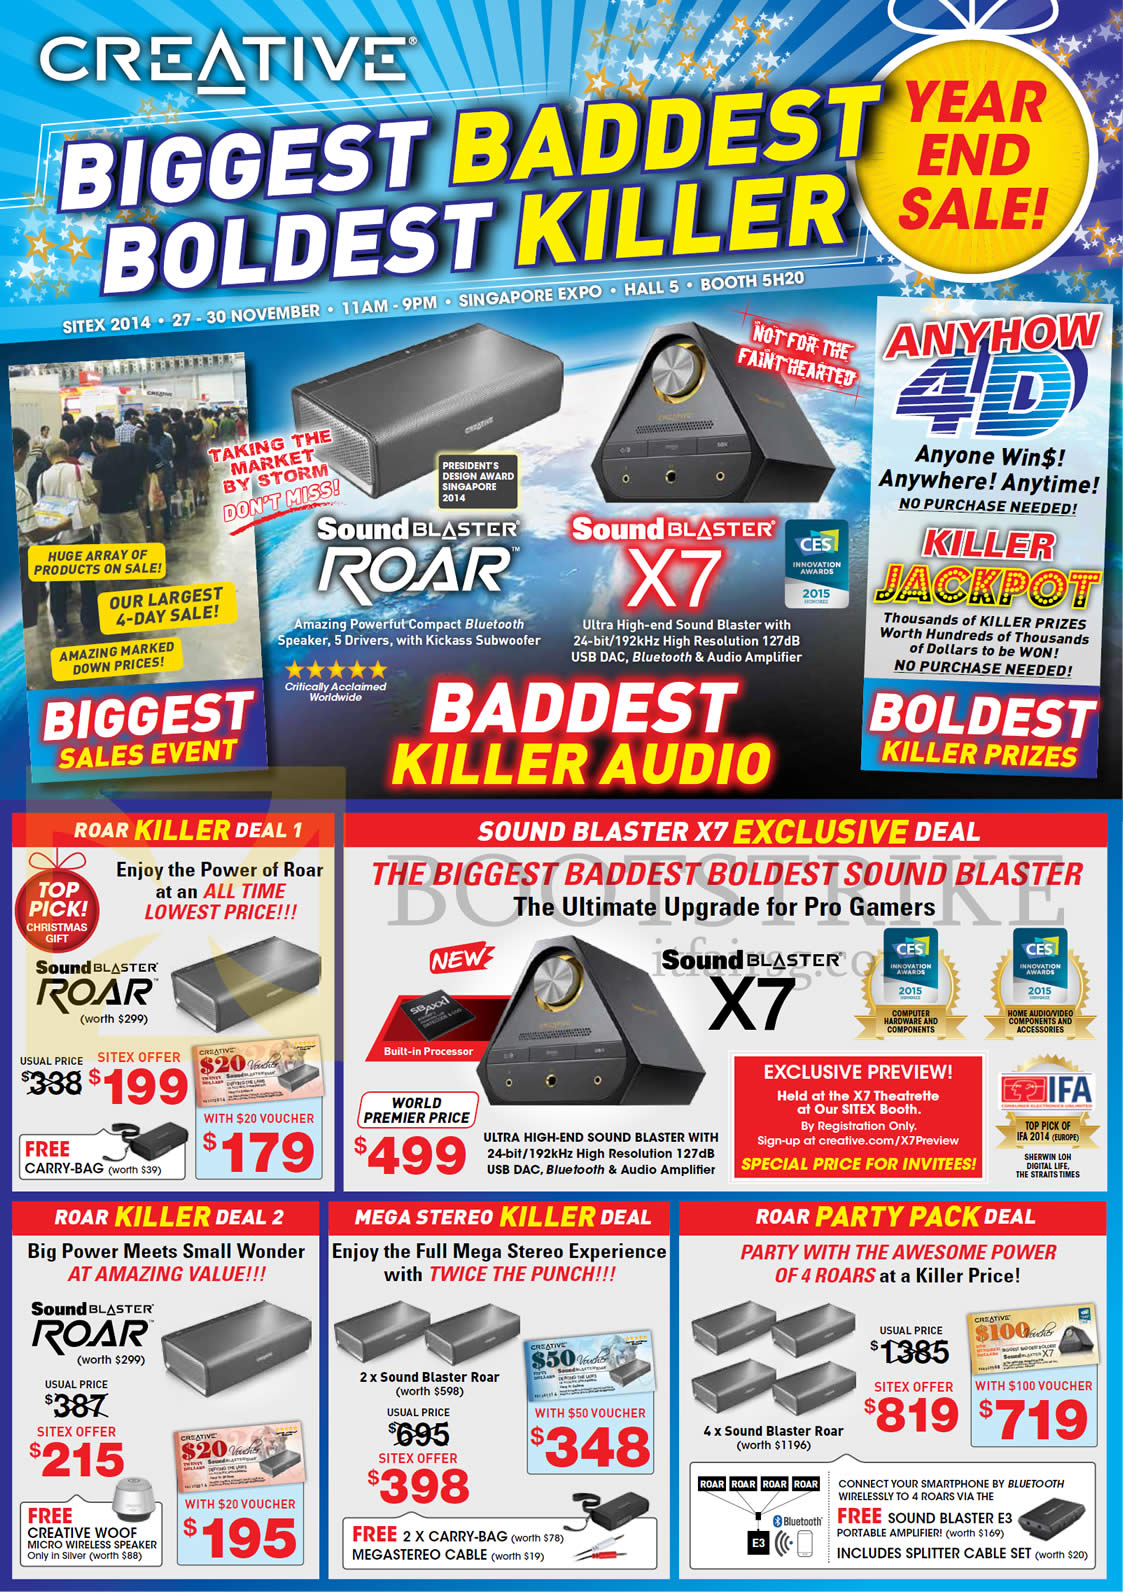 SITEX 2014 price list image brochure of Creative Sound Blaster Roar Killer Deals, Party Pack Deal, Roar Bluetooth Speaker, Sound Blaster X7